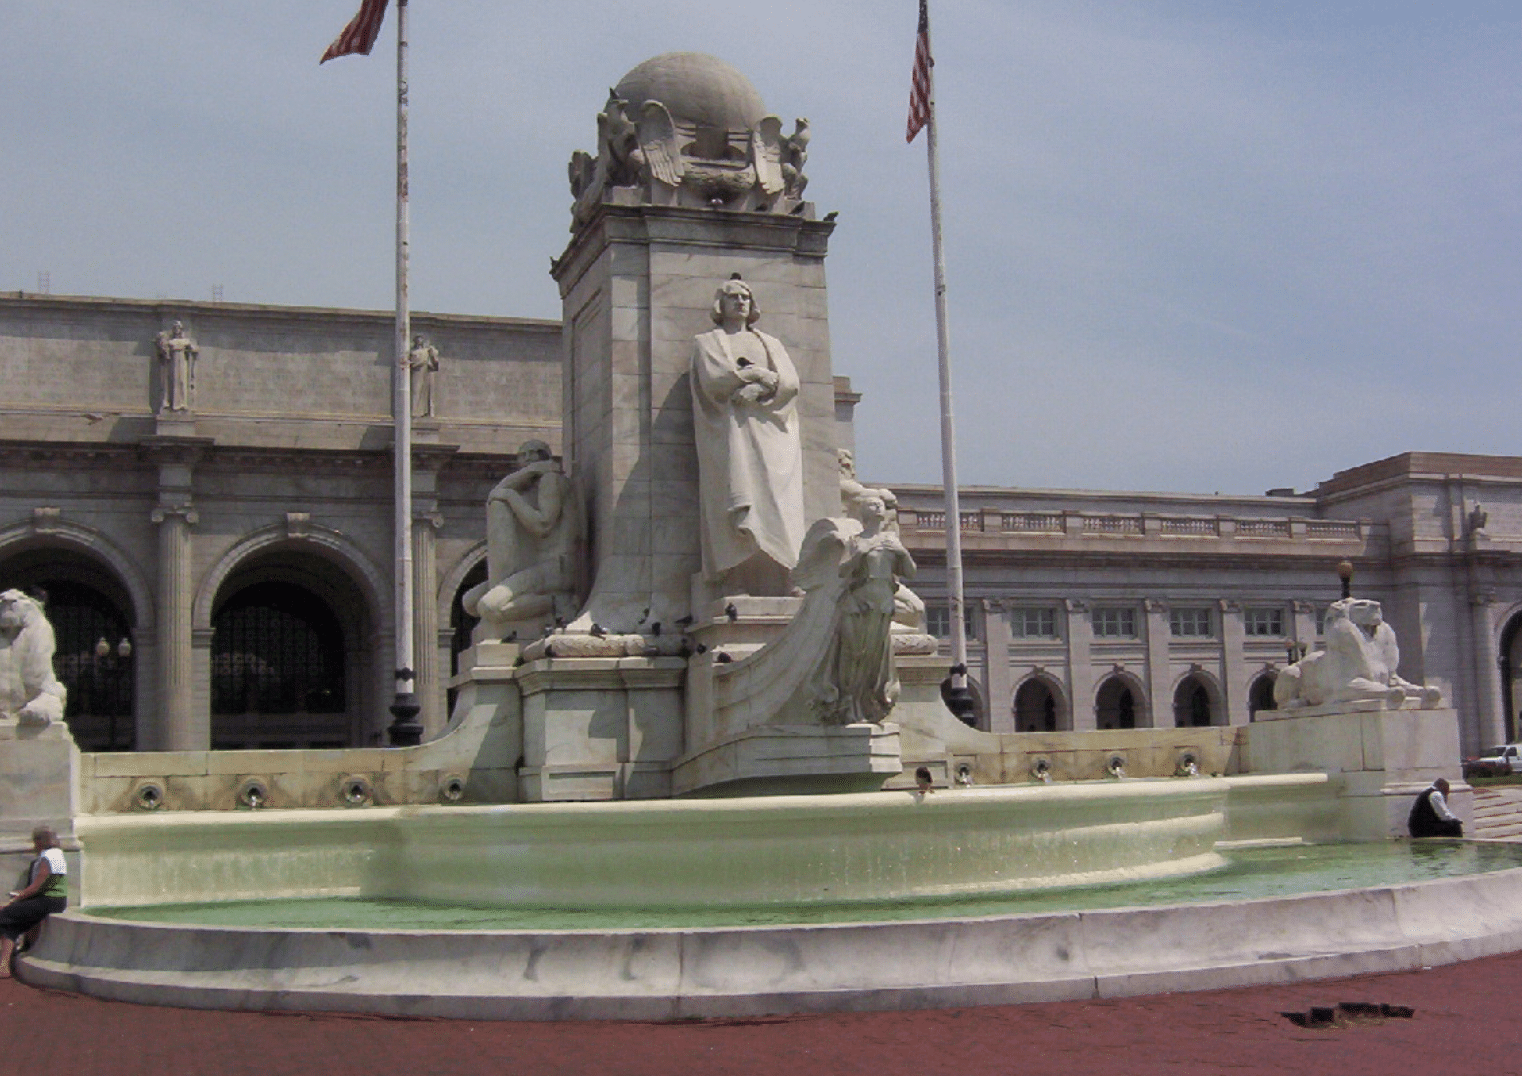 Christopher Columbus Statue, Union Station, Washington, D.C.